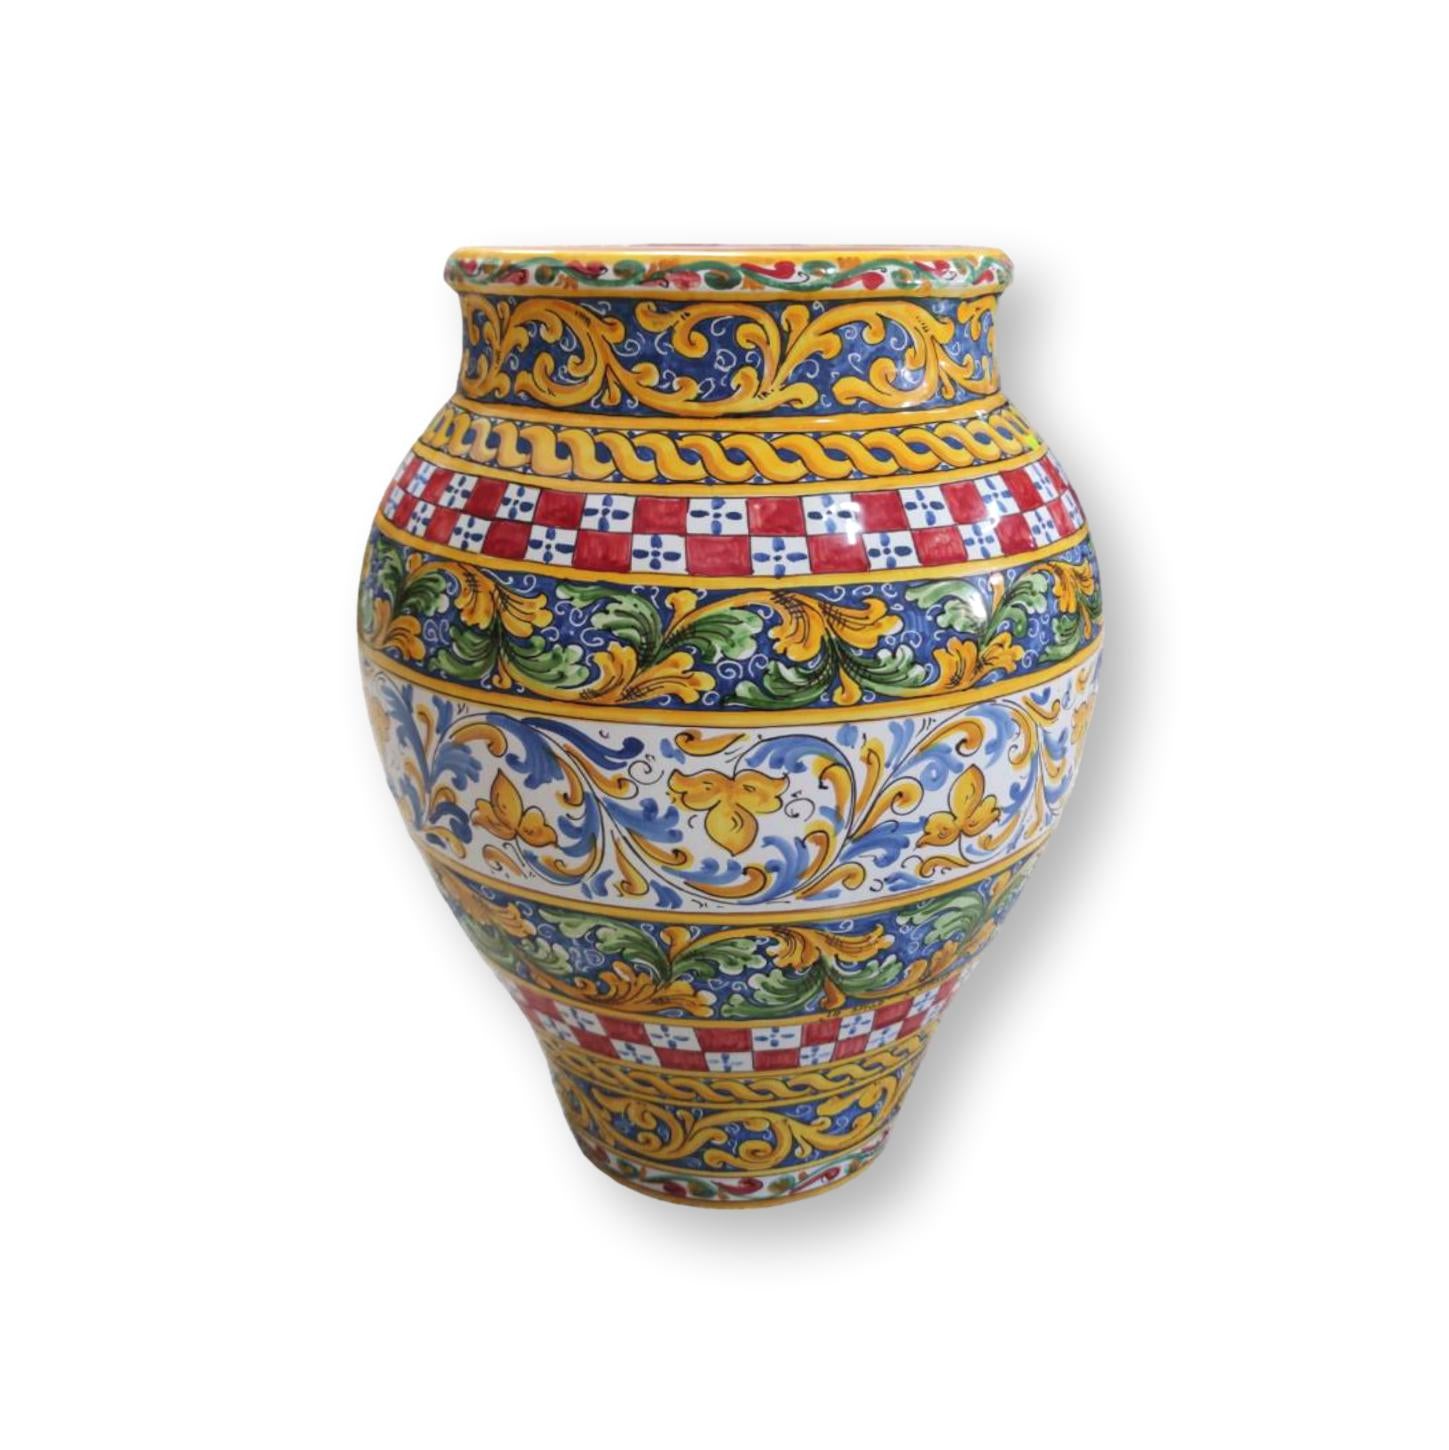 Giara in ceramica dipinta a mano - Ornamento misto di stili tipici Mediterranei